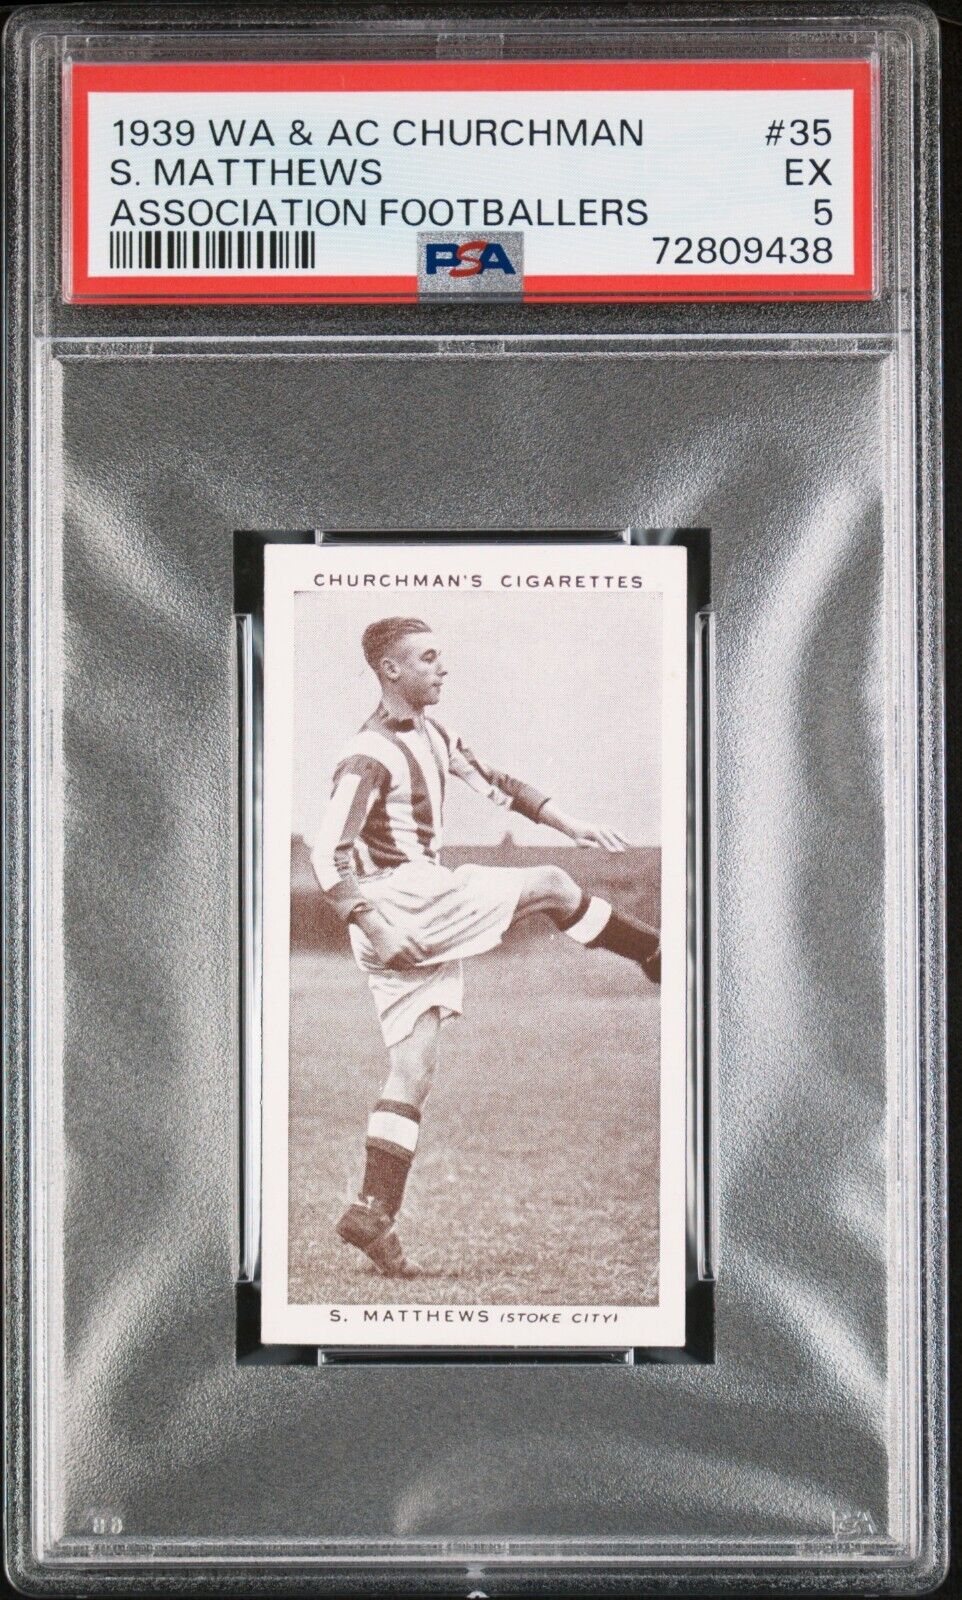 Stanley Matthews - 1939 W.A. & A.C. Churchman Association Footballers    PSA 5